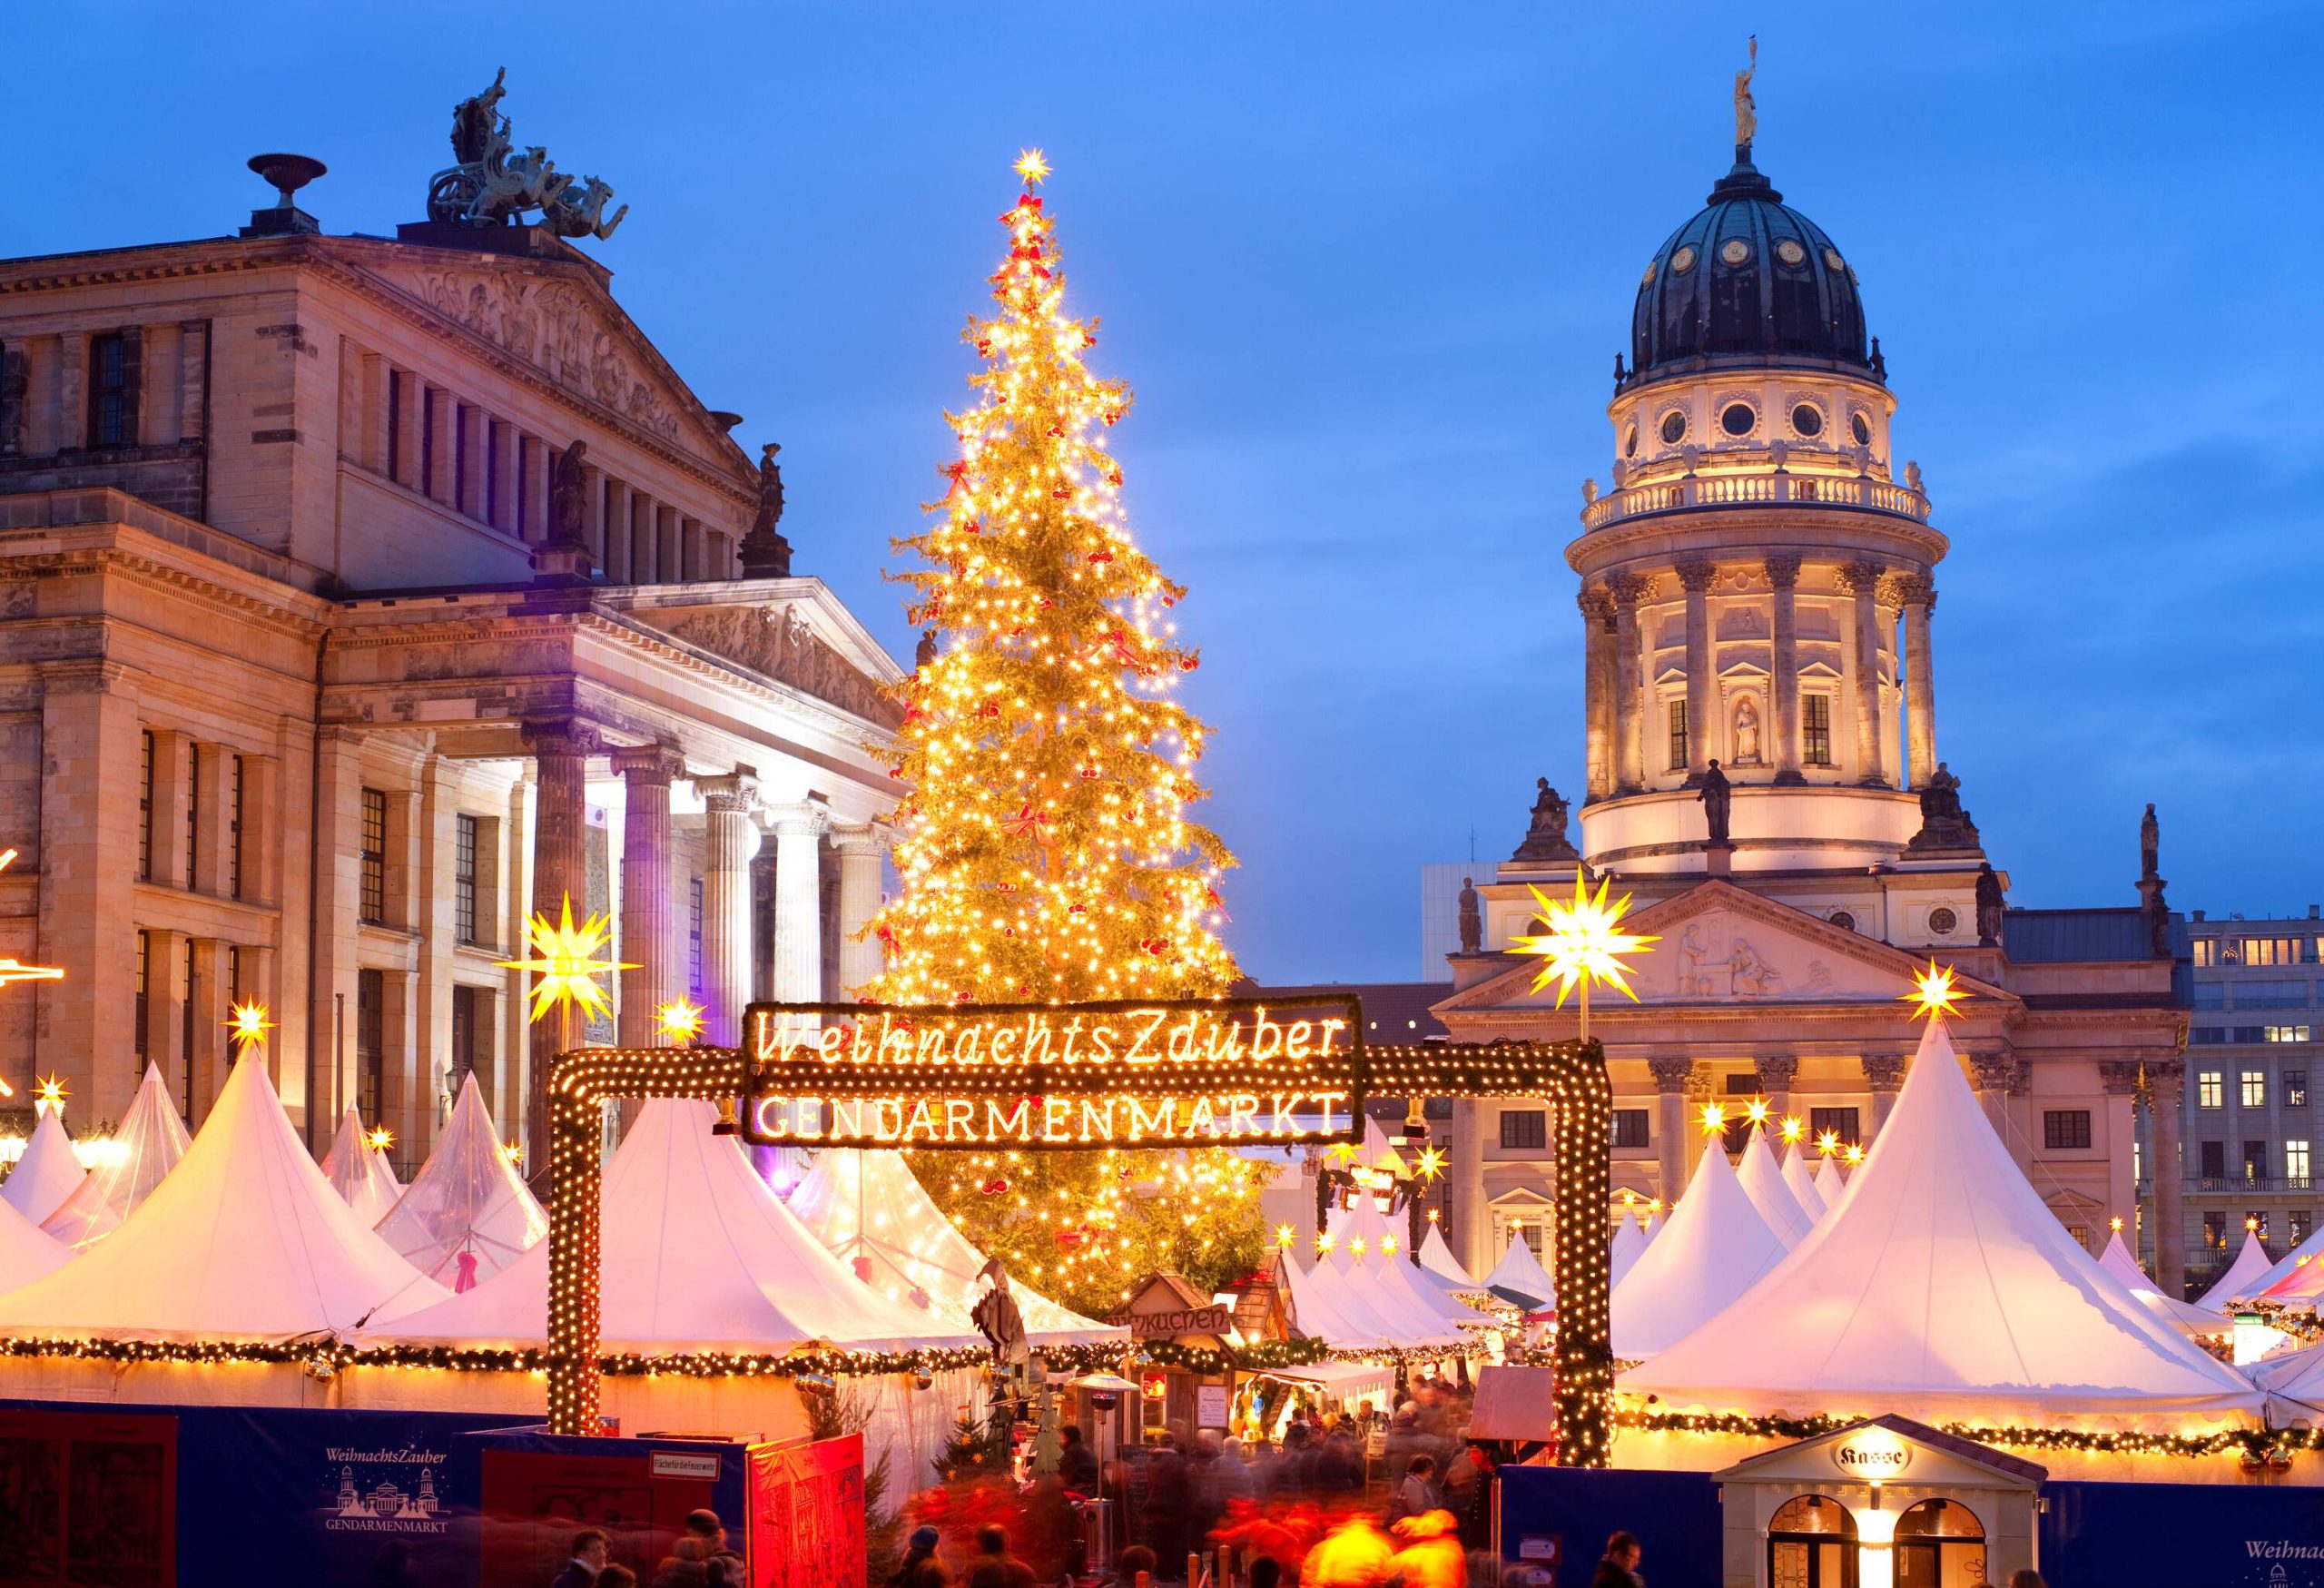 Street view of Christmas market on Gendarmenmarkt, Berlin, Germany at dusk